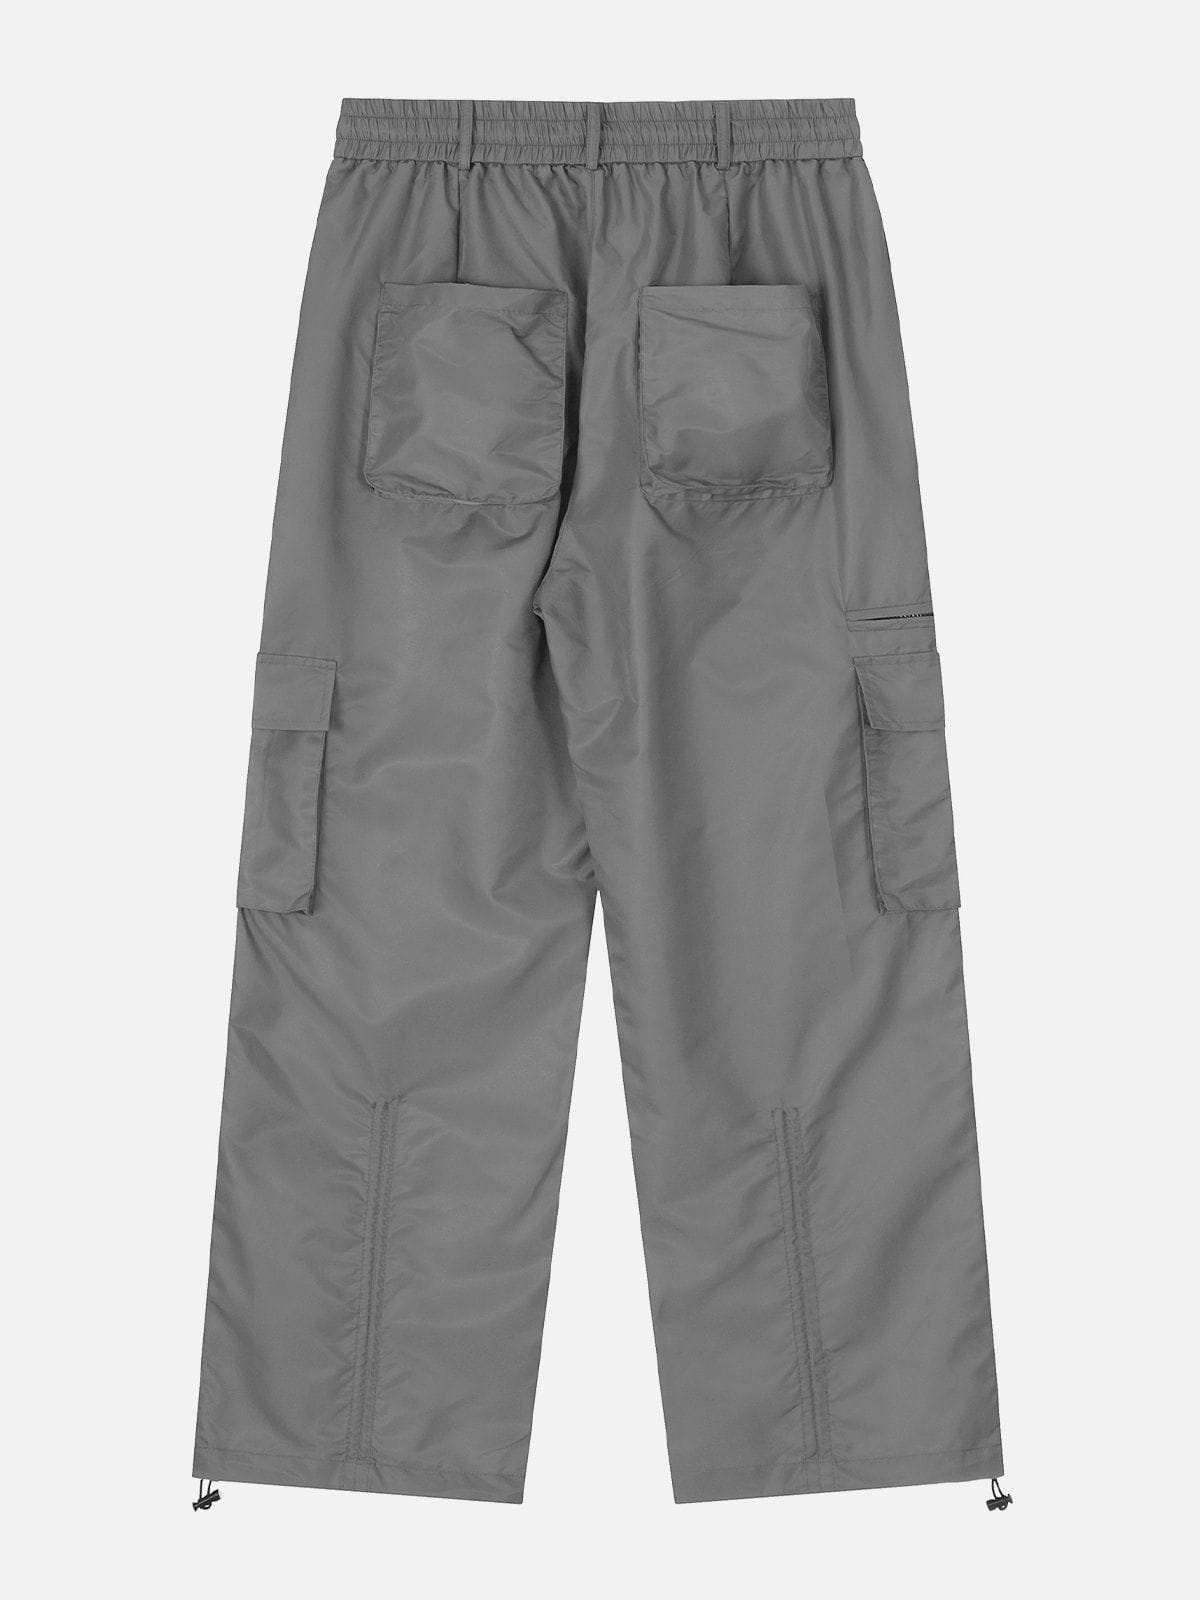 Majesda® - Multi-Pocket Cargo Pants outfit ideas streetwear fashion